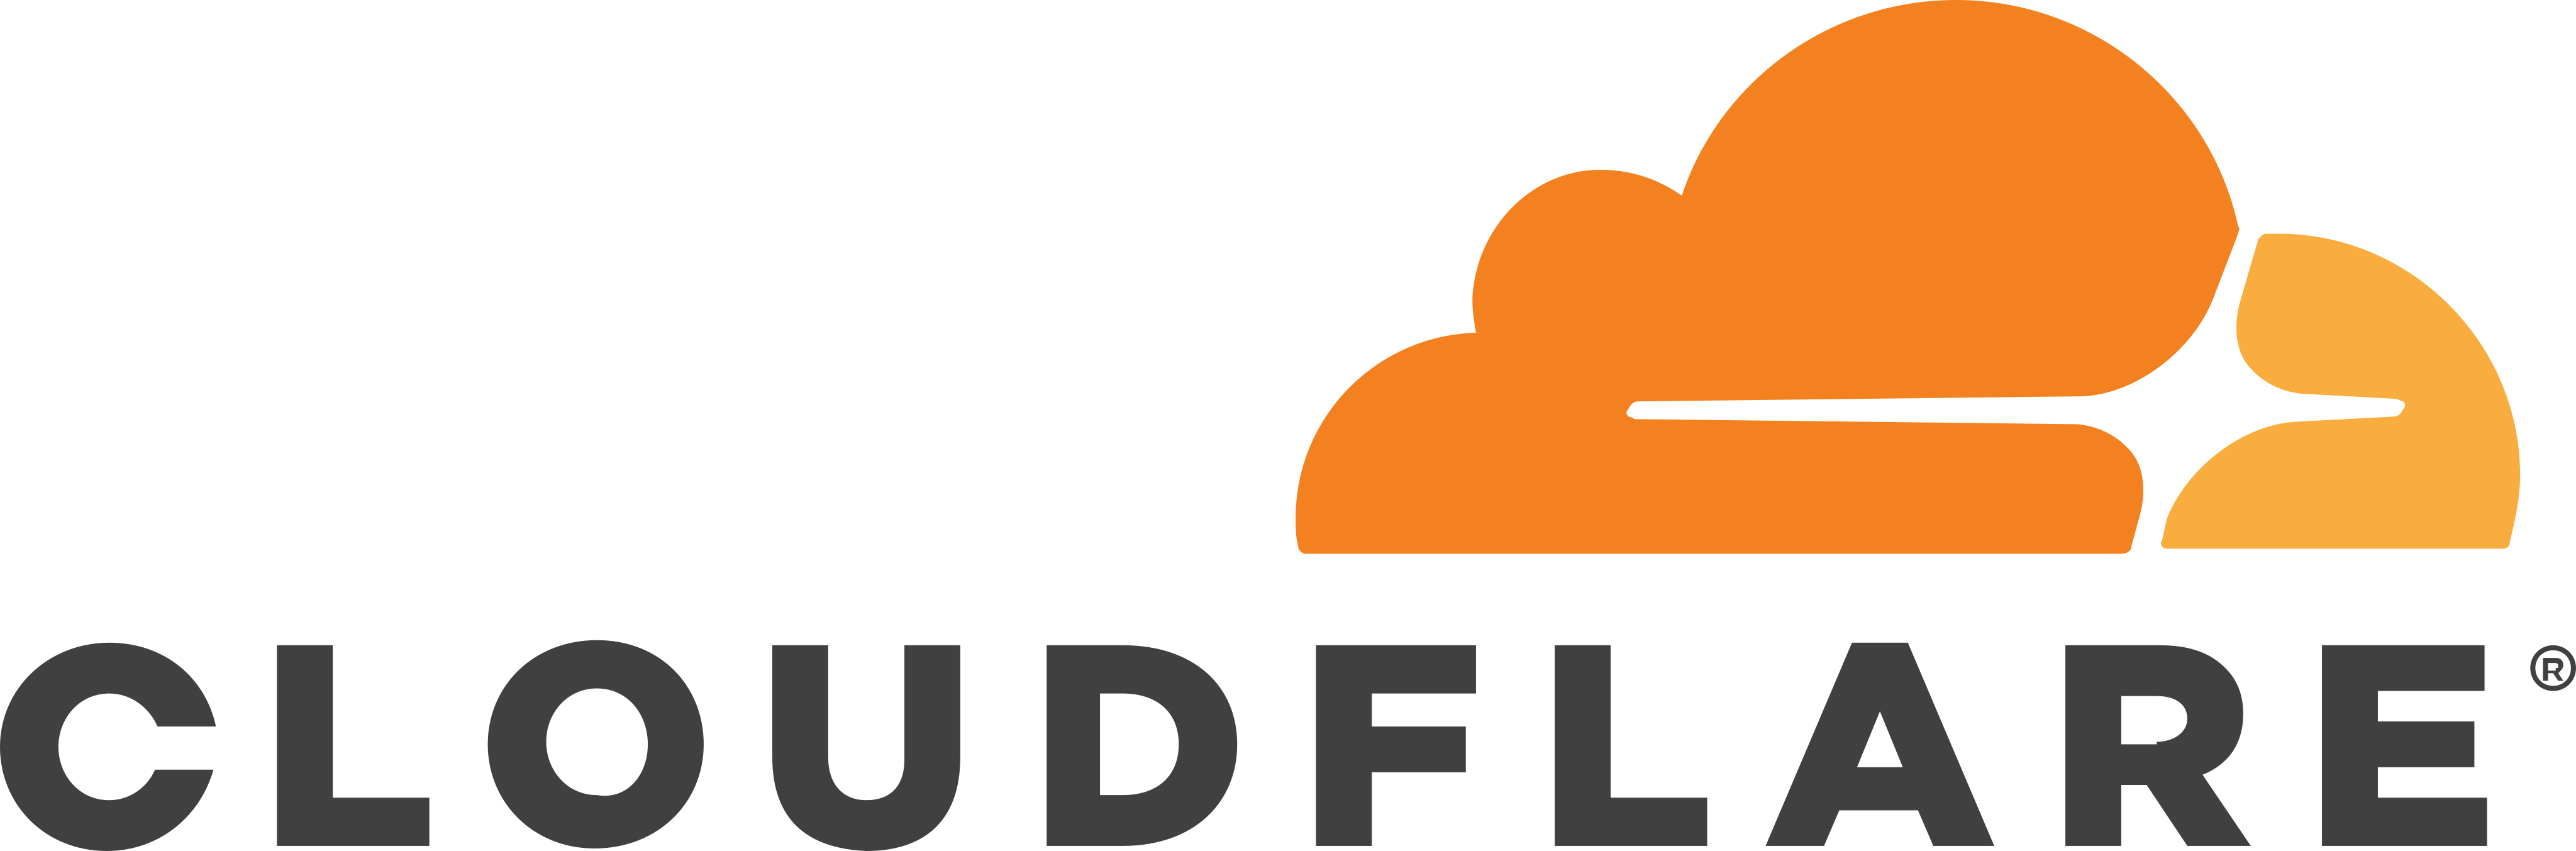 Cloudflare Logo 7